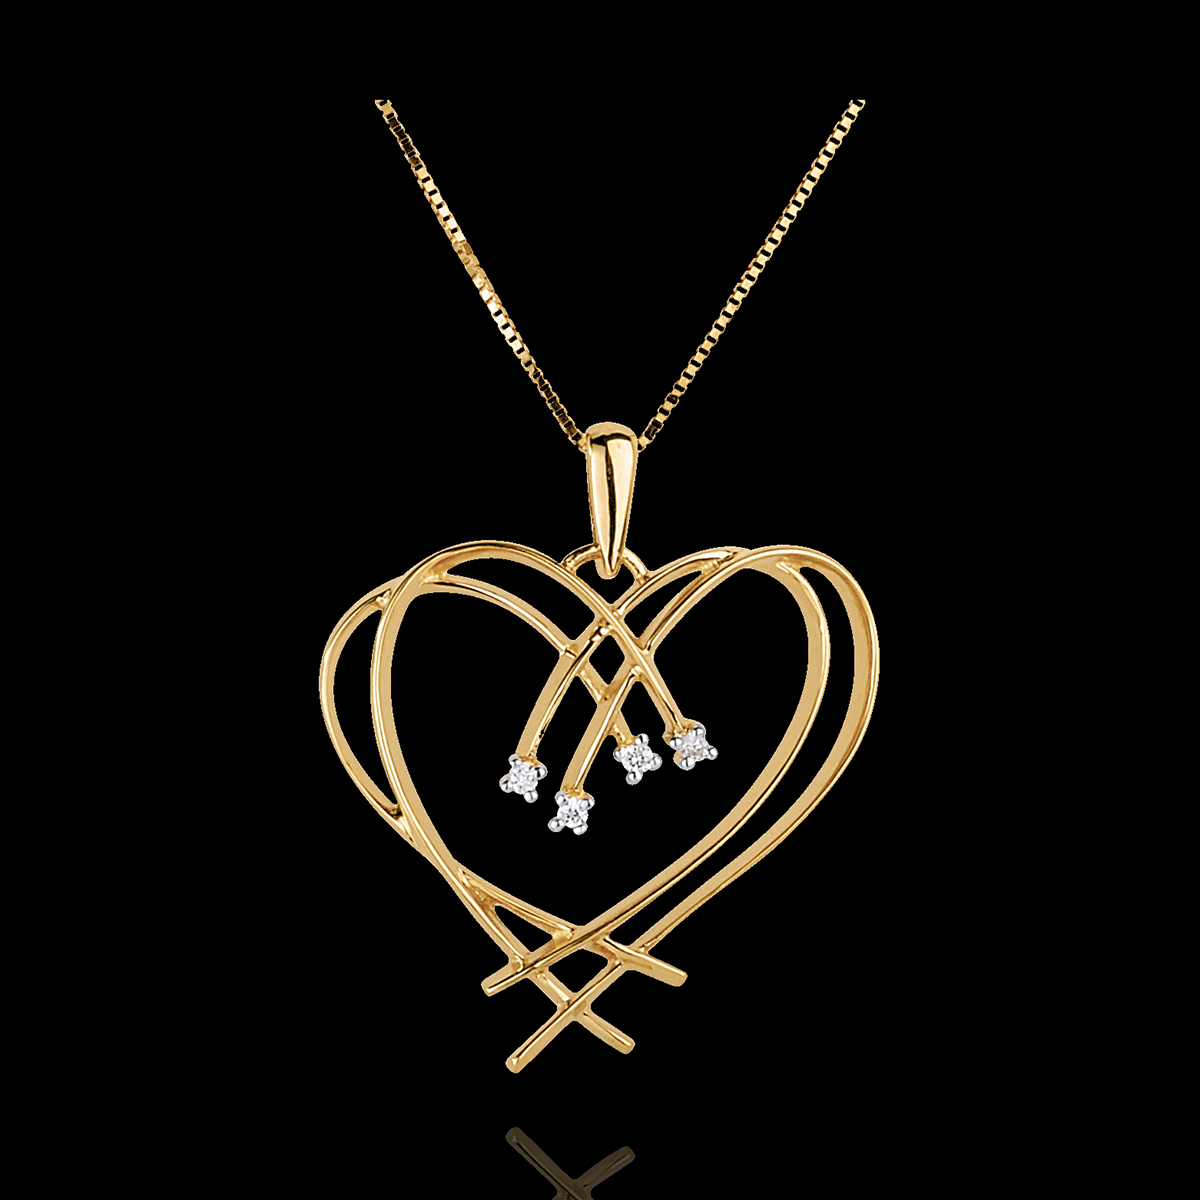 Sparkle Heart Pendant - 4 Diamonds : Edenly jewellery